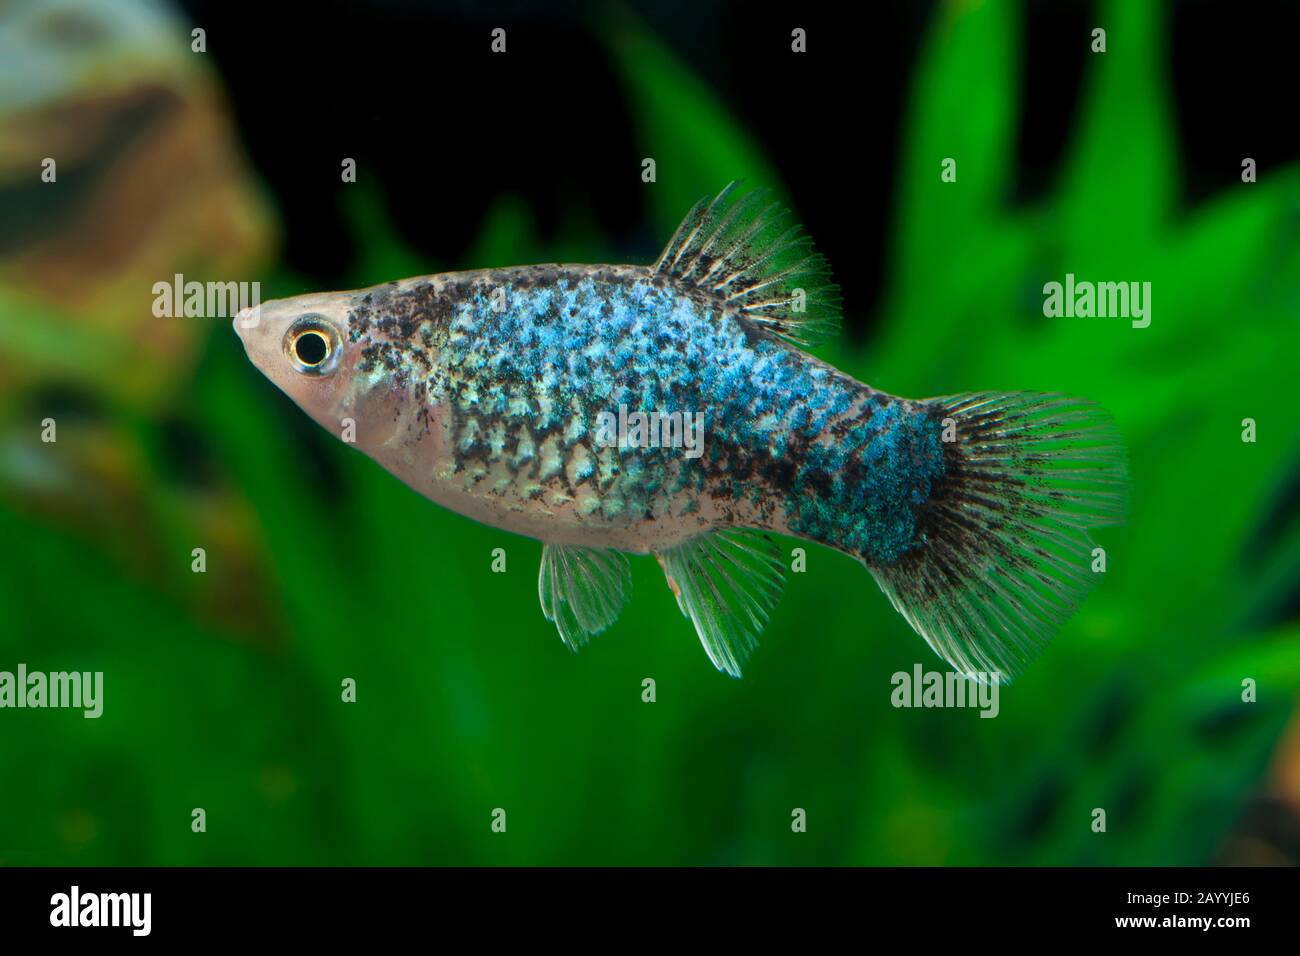 Pesce platyfish meridionale (Xiphophorus maculatus), forma di allevamento Calico Blau Foto Stock